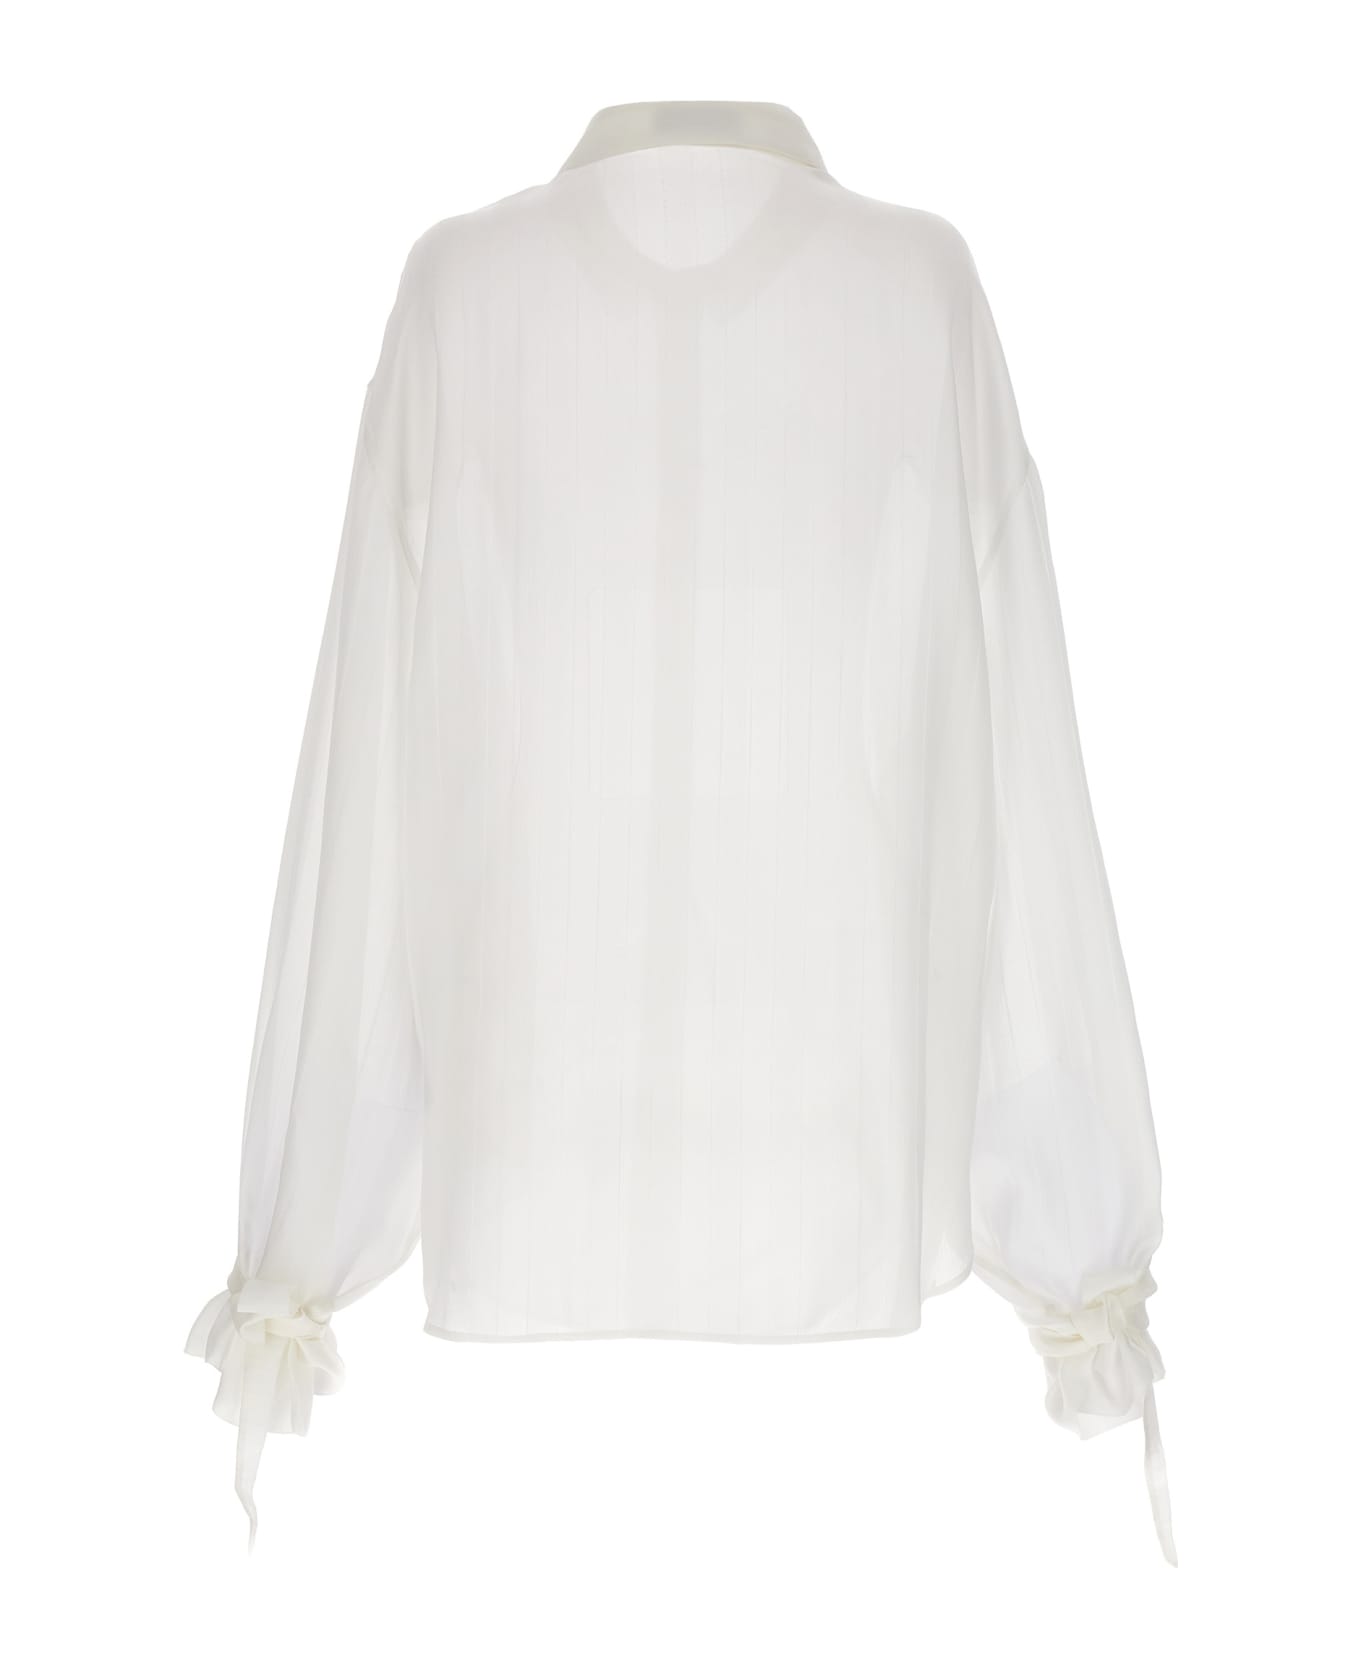 Saint Laurent Striped Silk Shirt - White